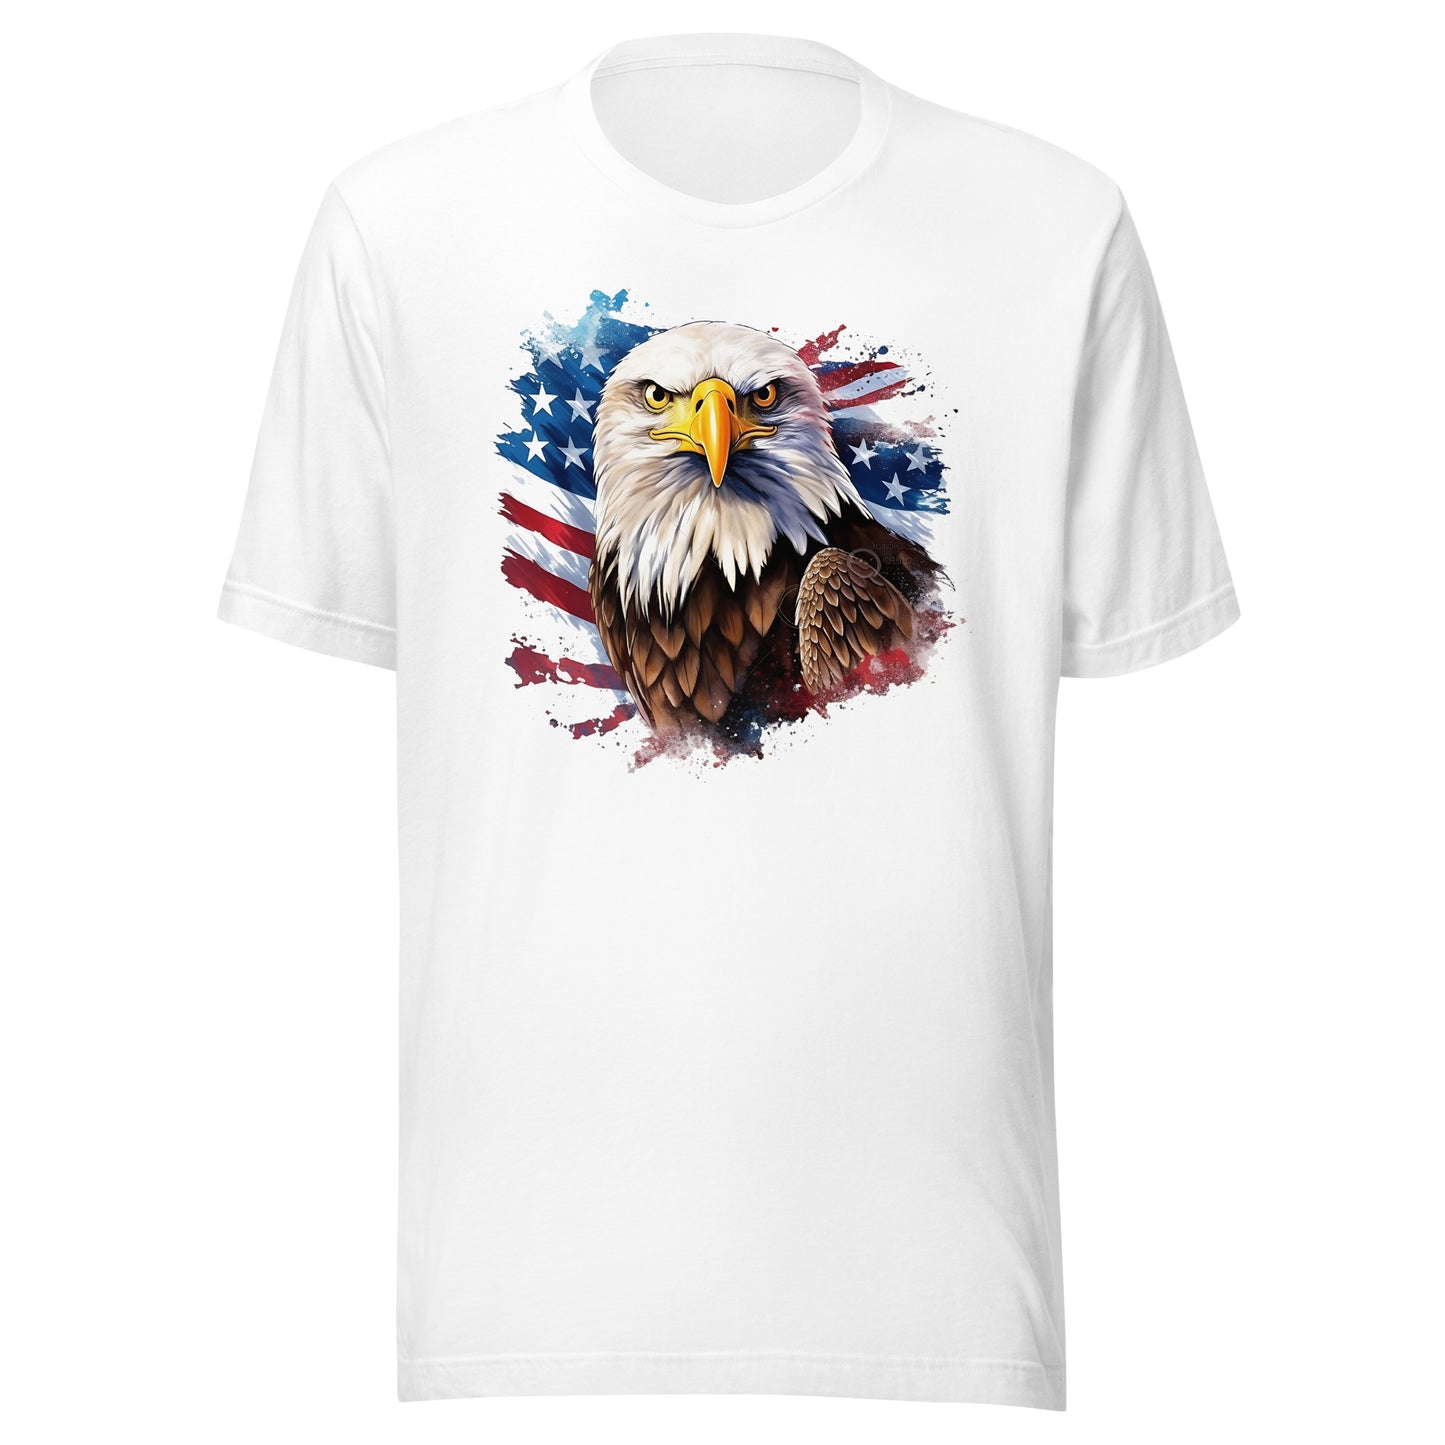 White Patriotic American Eagle T-shirt